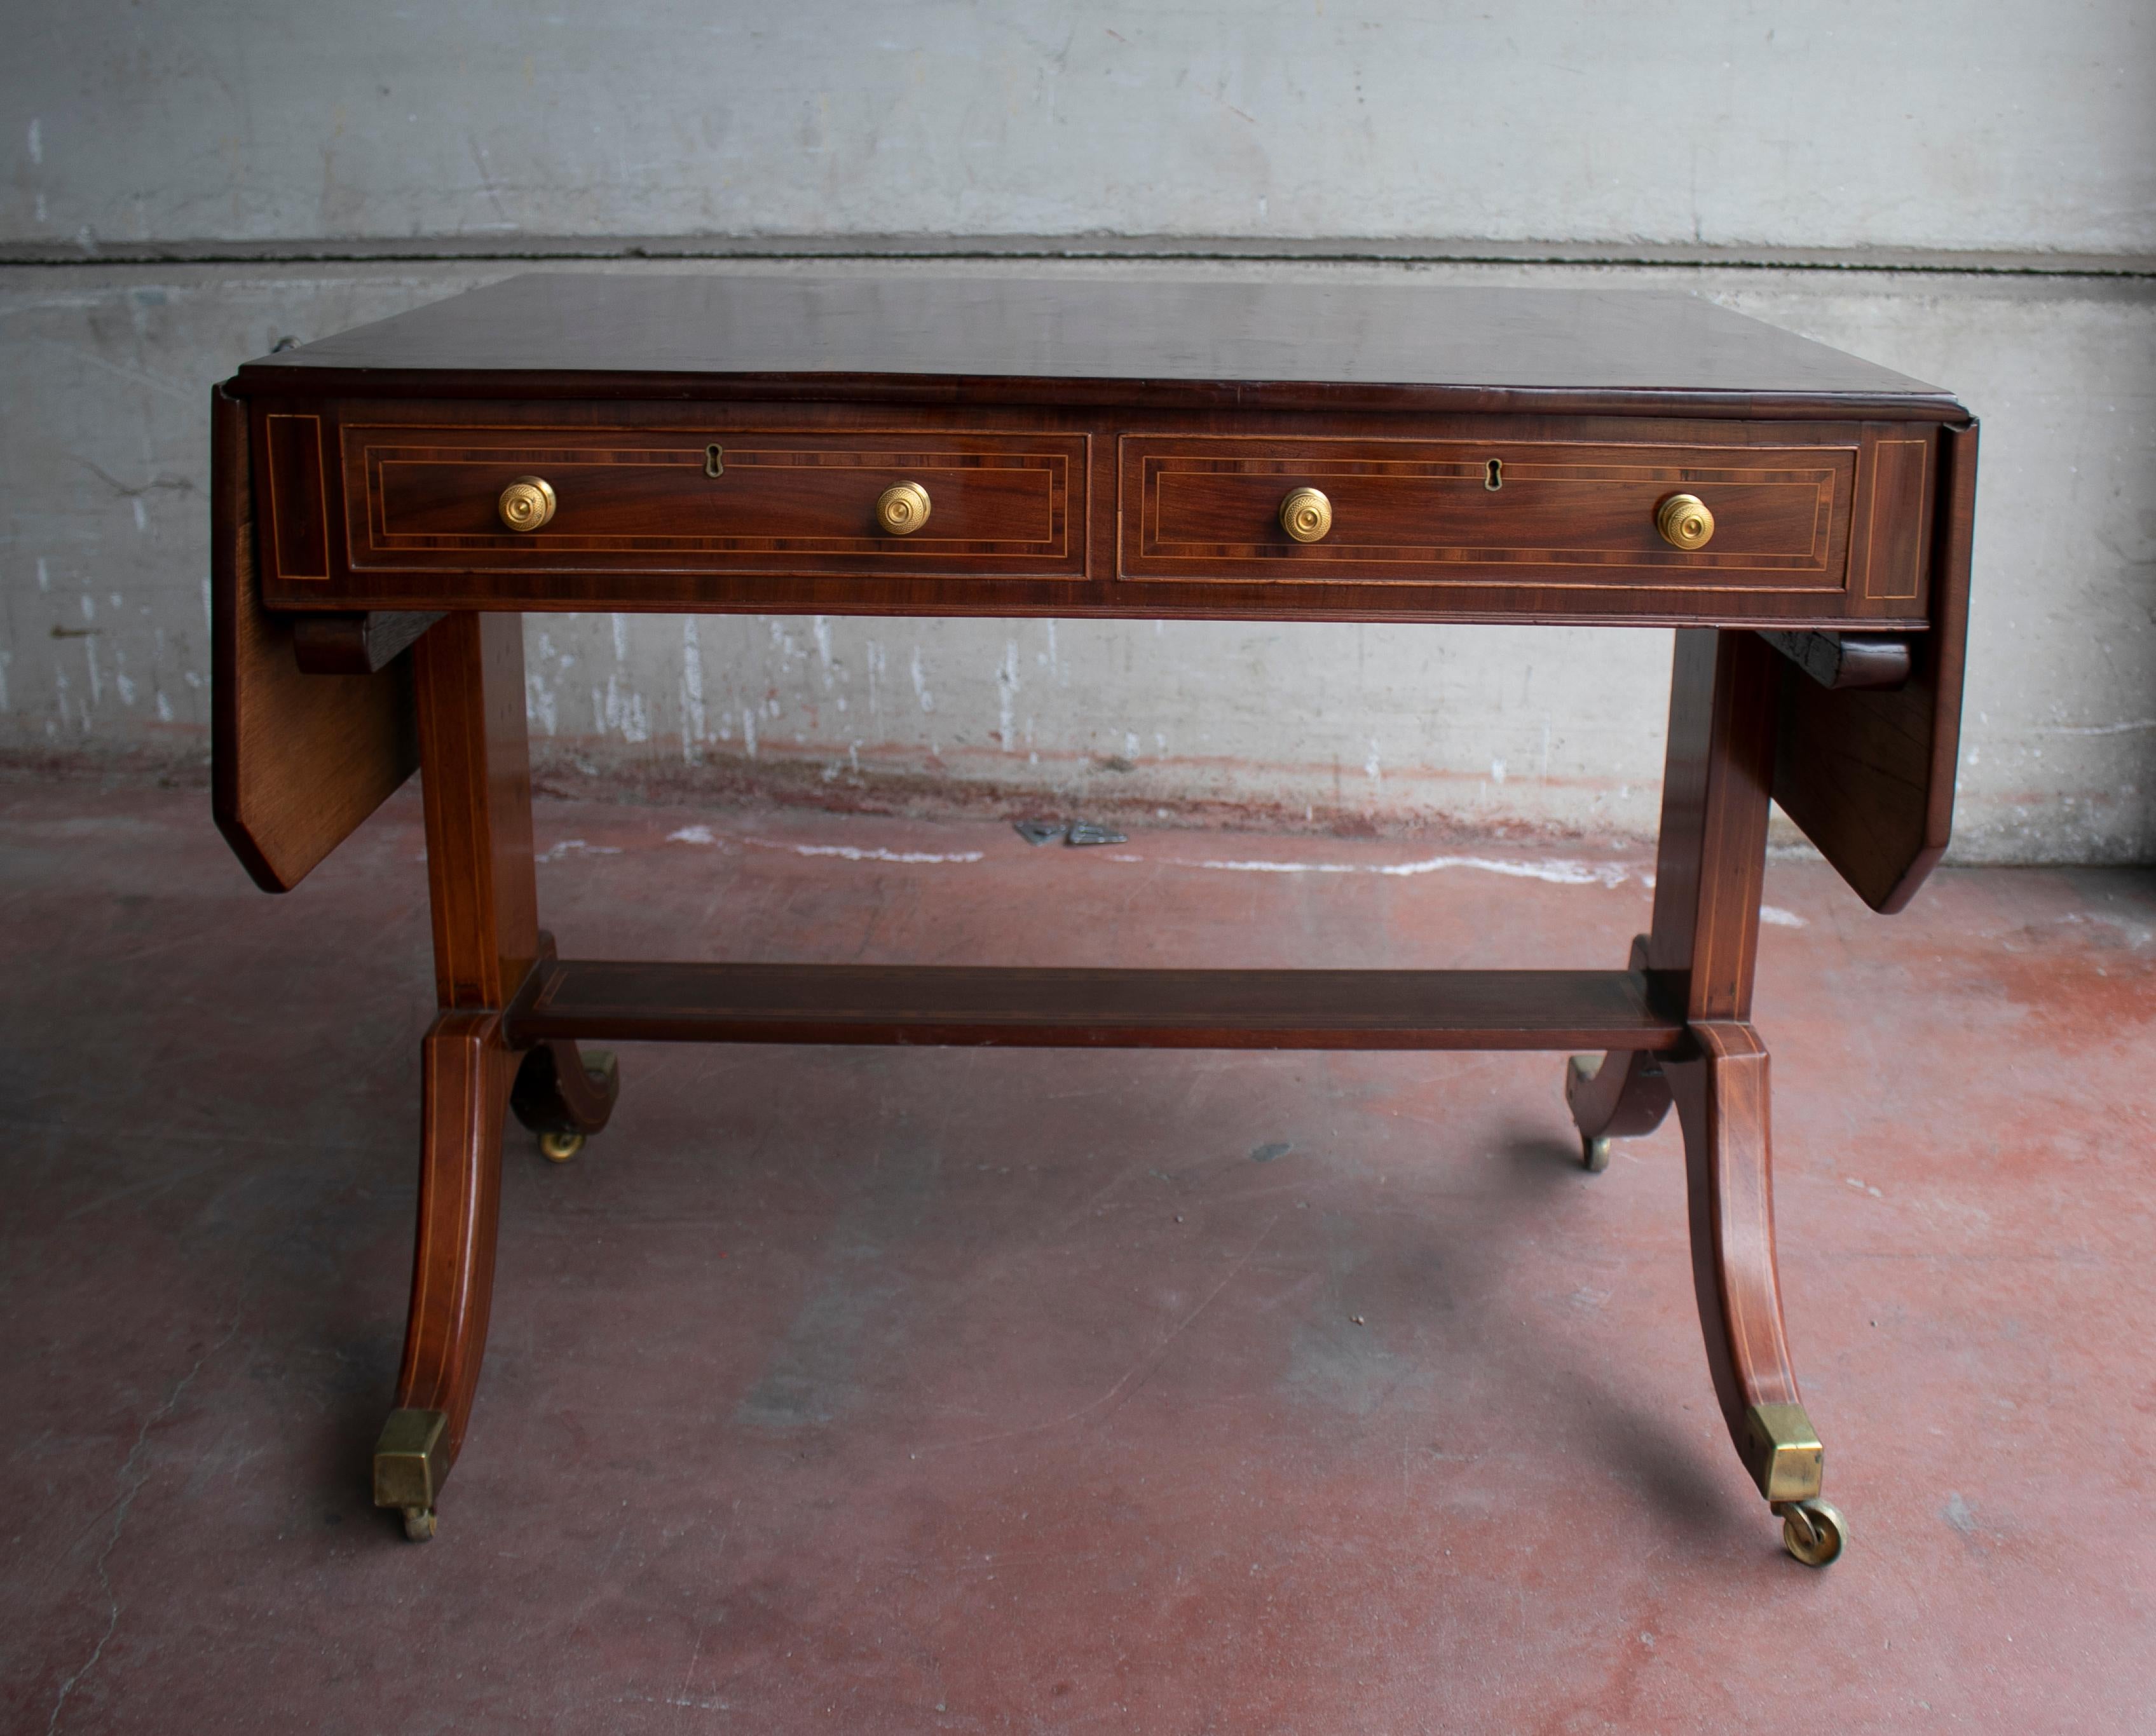 19th century English mahogany folding table.

Full width open: 150cm.